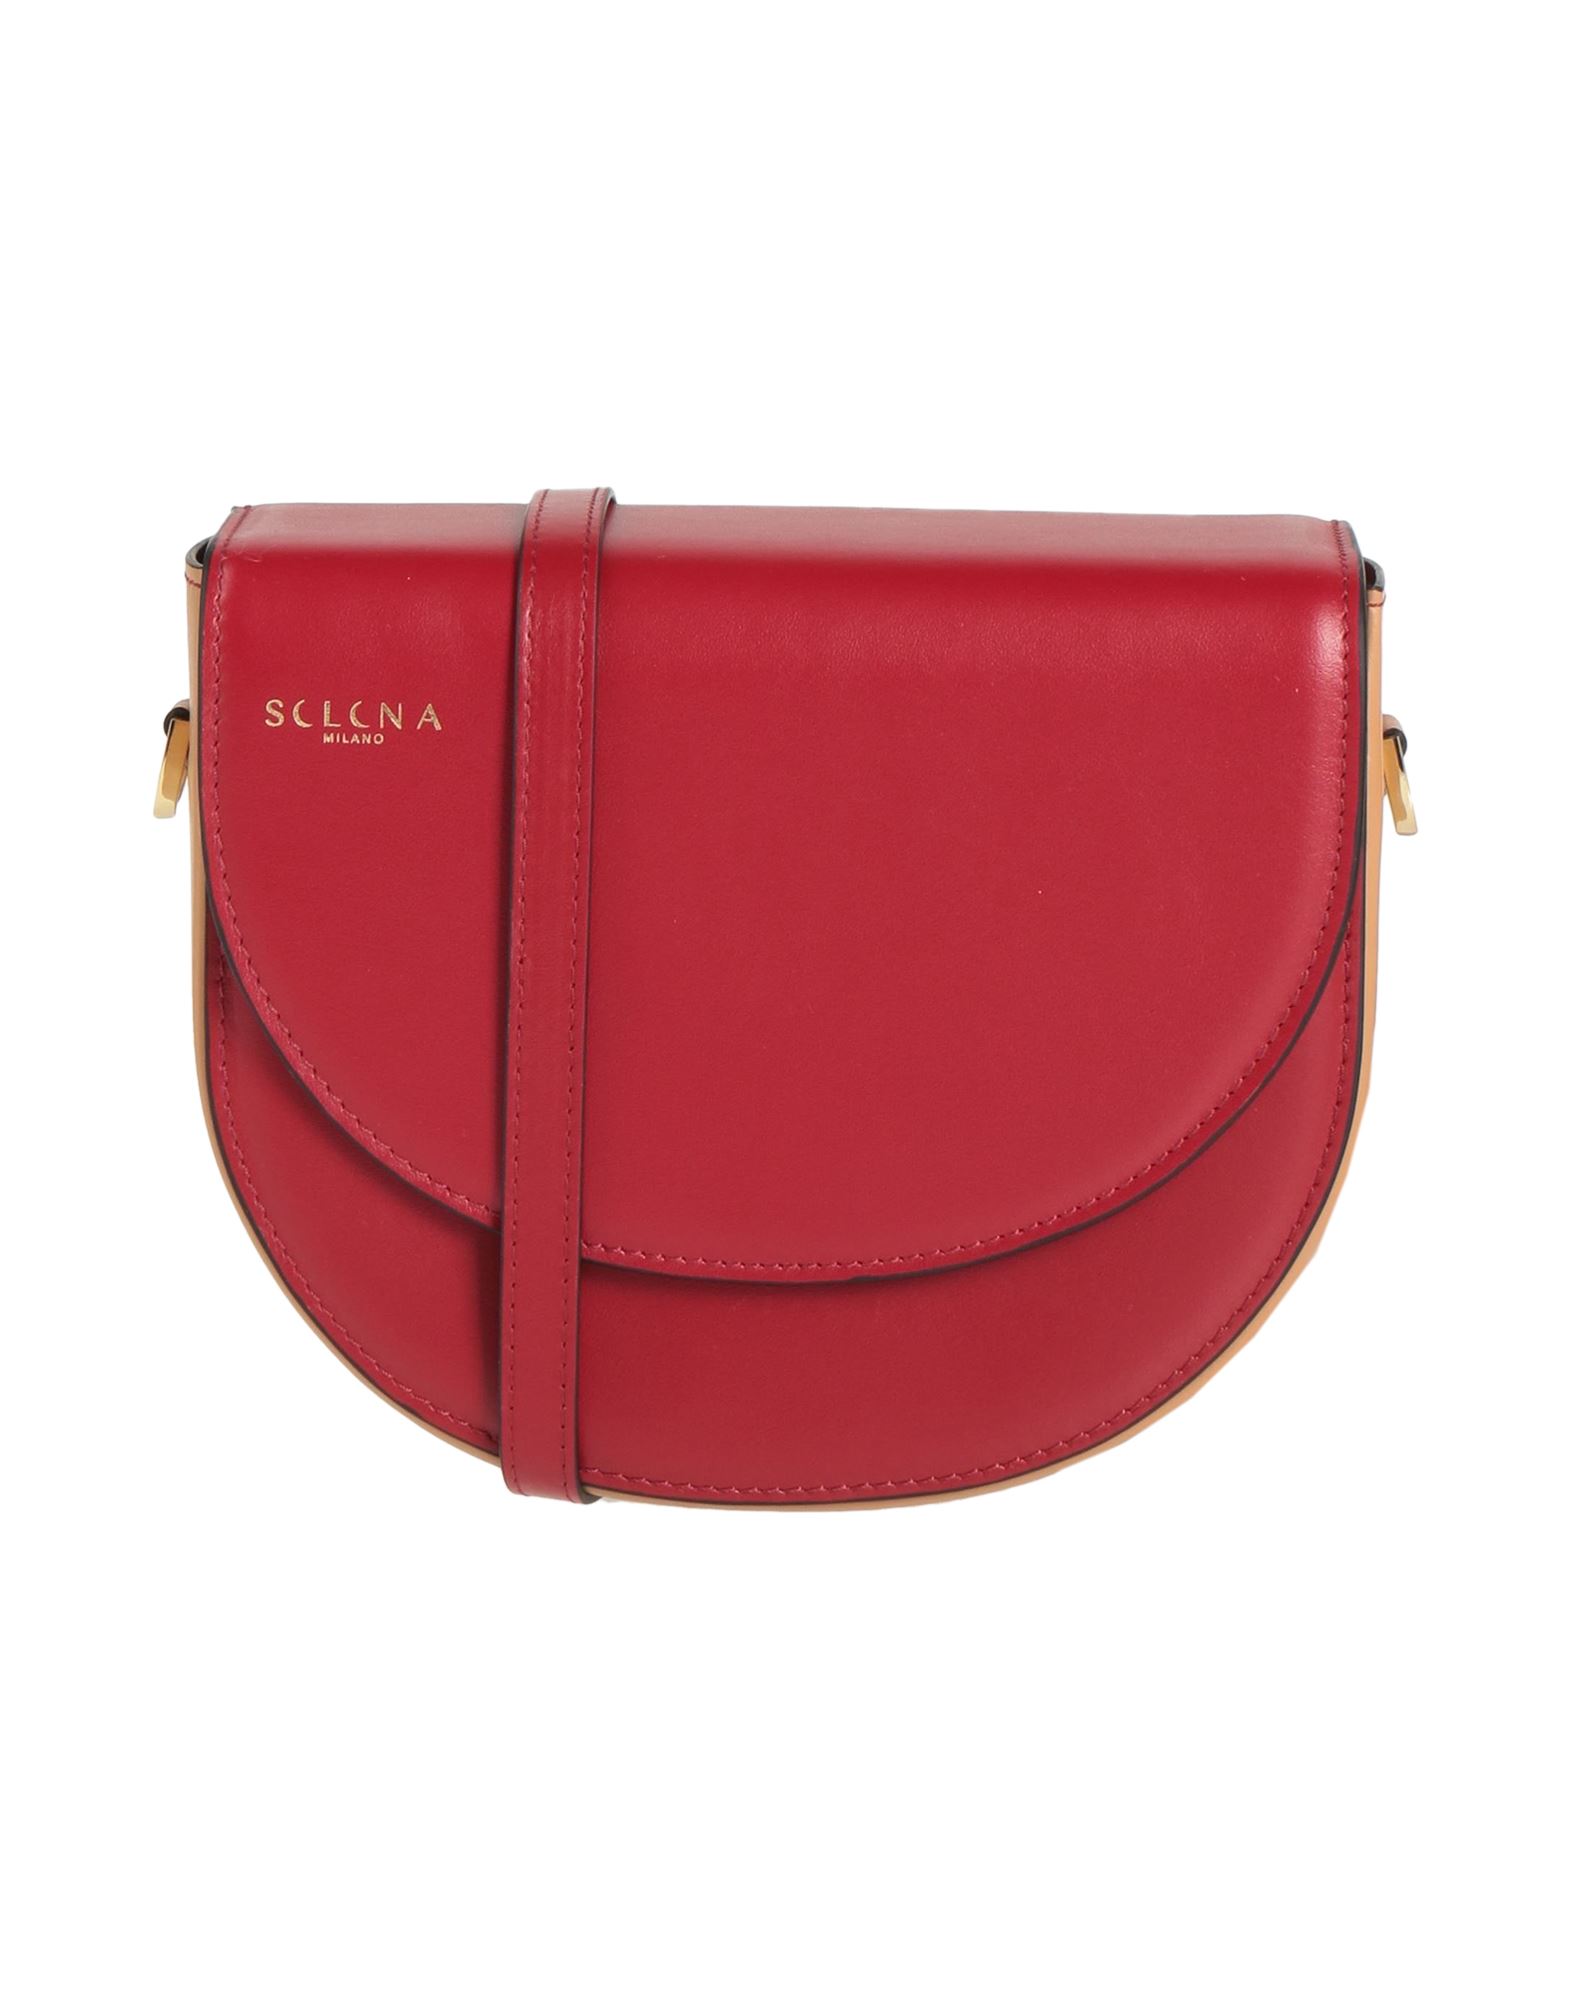 Selena Milano Handbags In Red